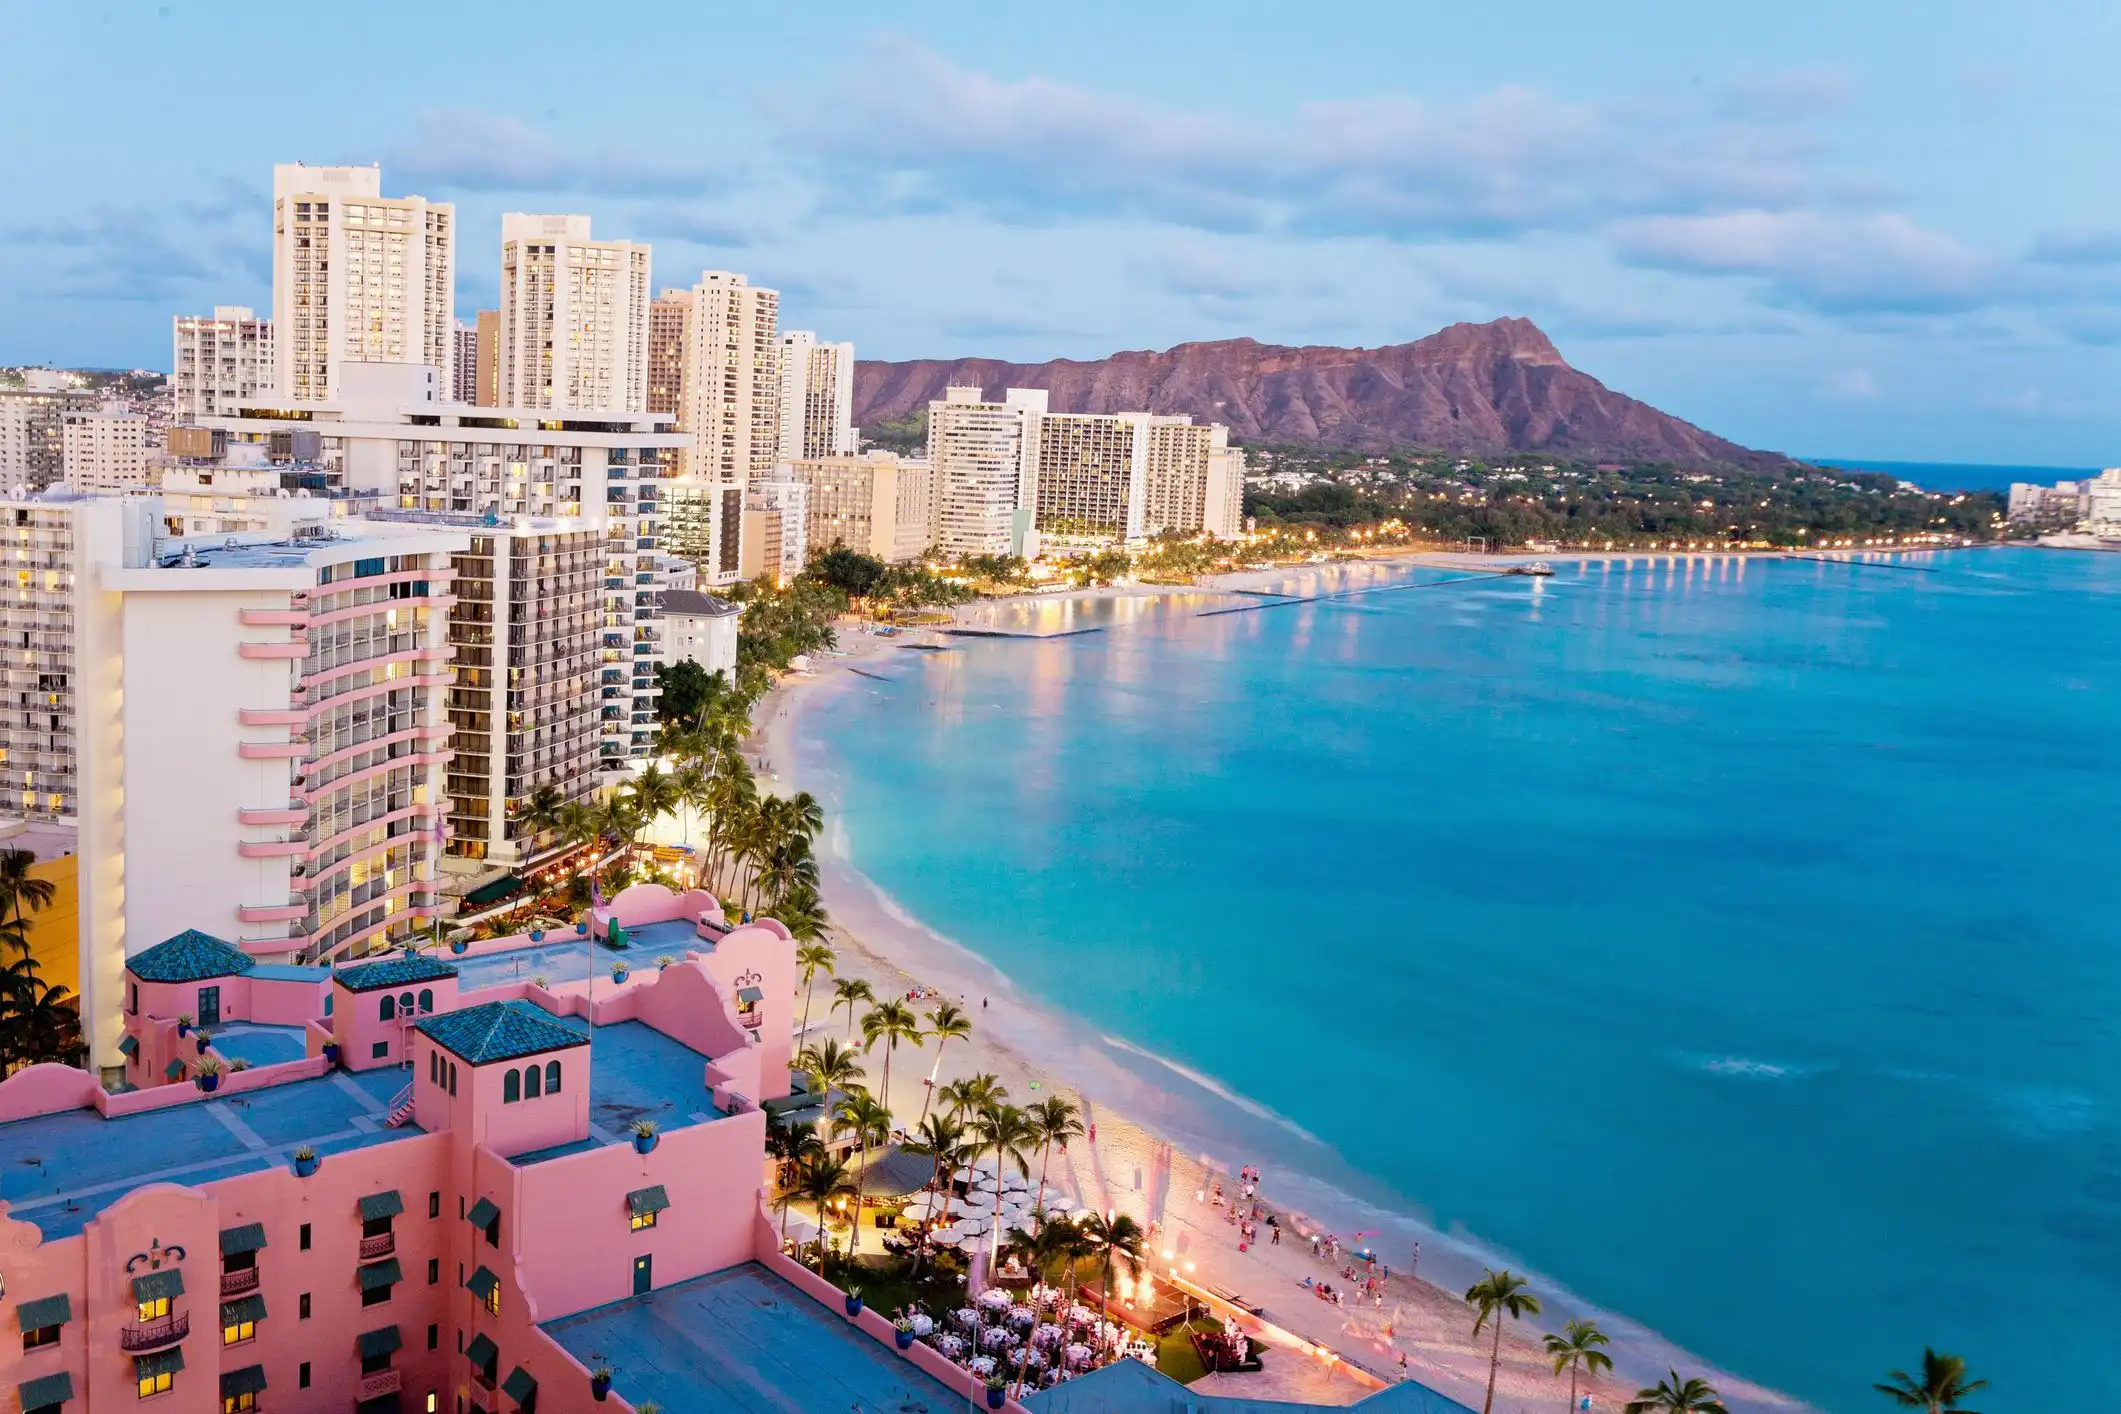 Honolulu tourism